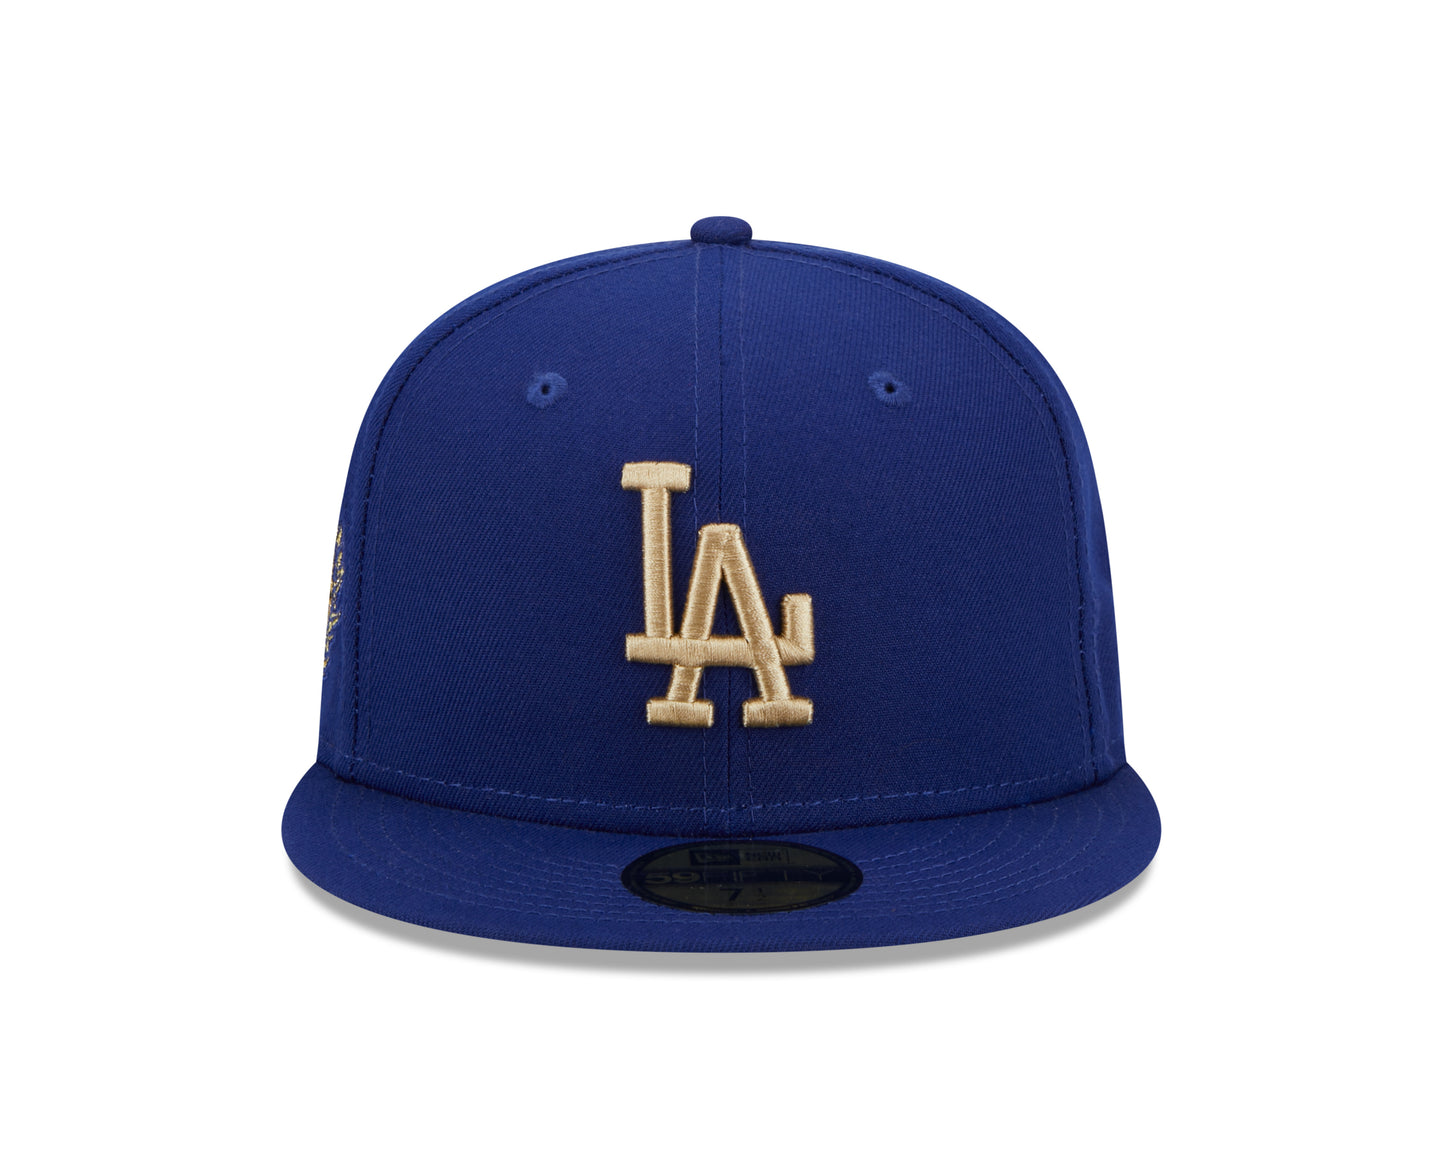 New Era - Laurel Side Patch - Los Angeles Dodgers - Dark Royal Blue - Headz Up 